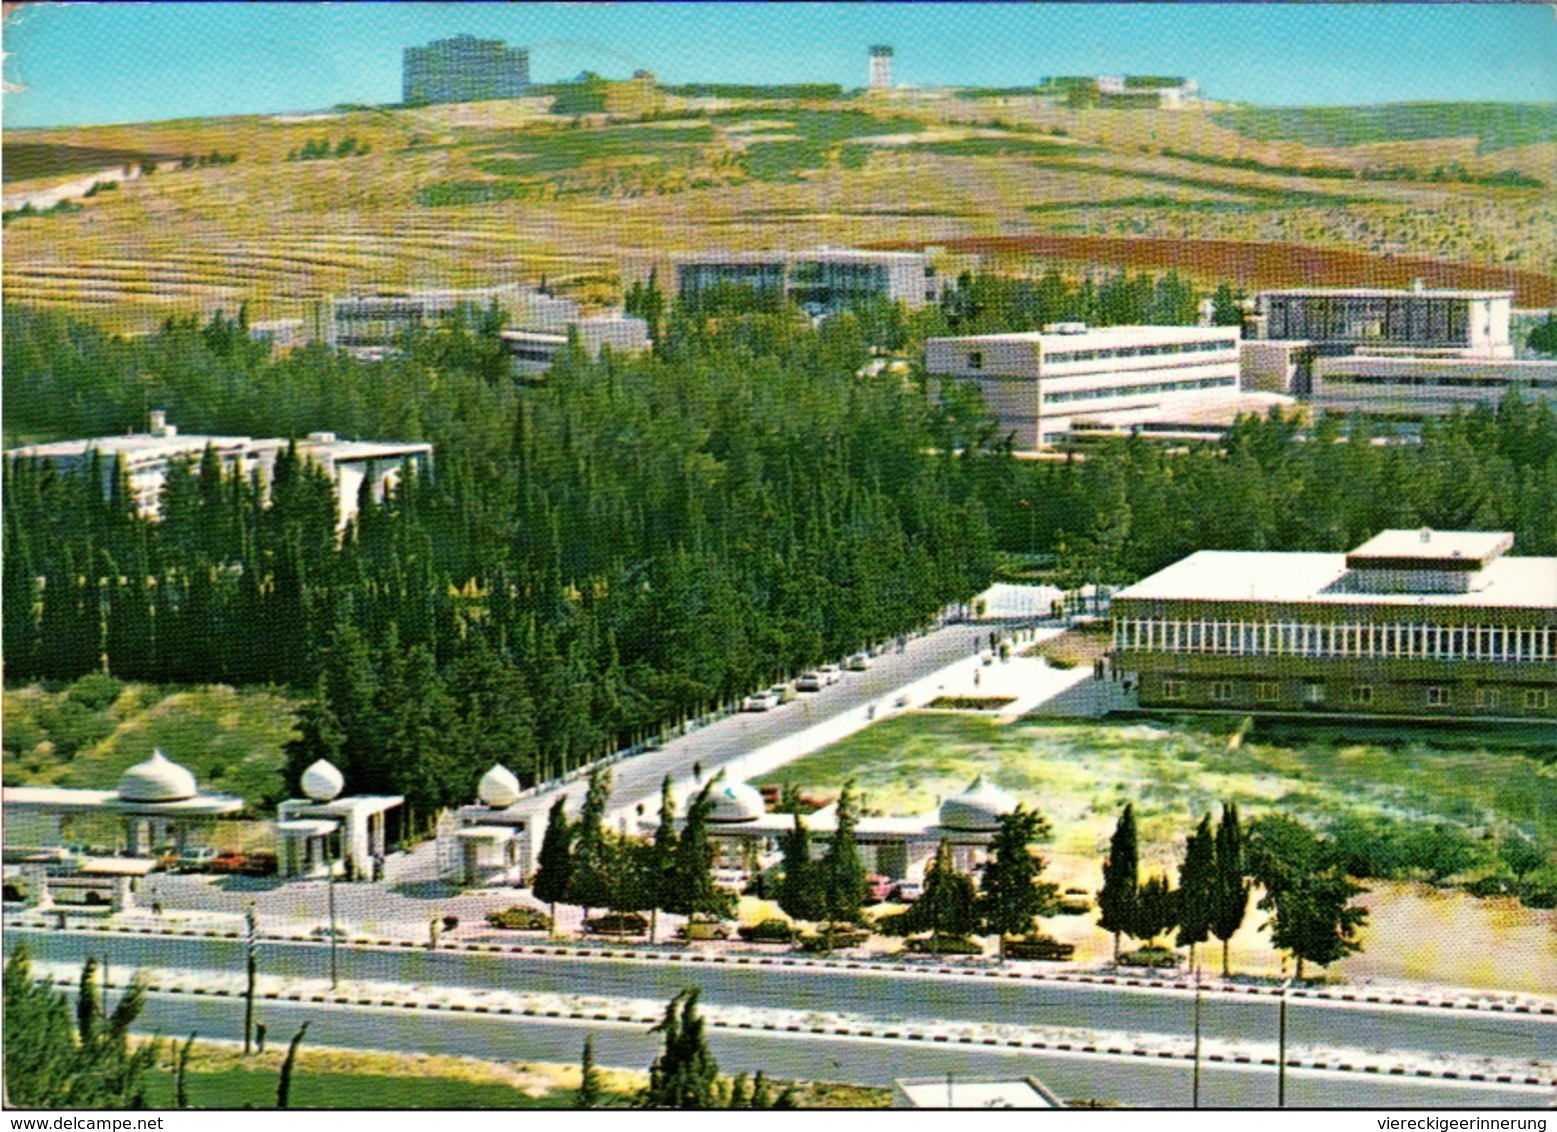 !  Postcard From Jordan, Jordanien Amman, Universität, University, Universite - Jordanien